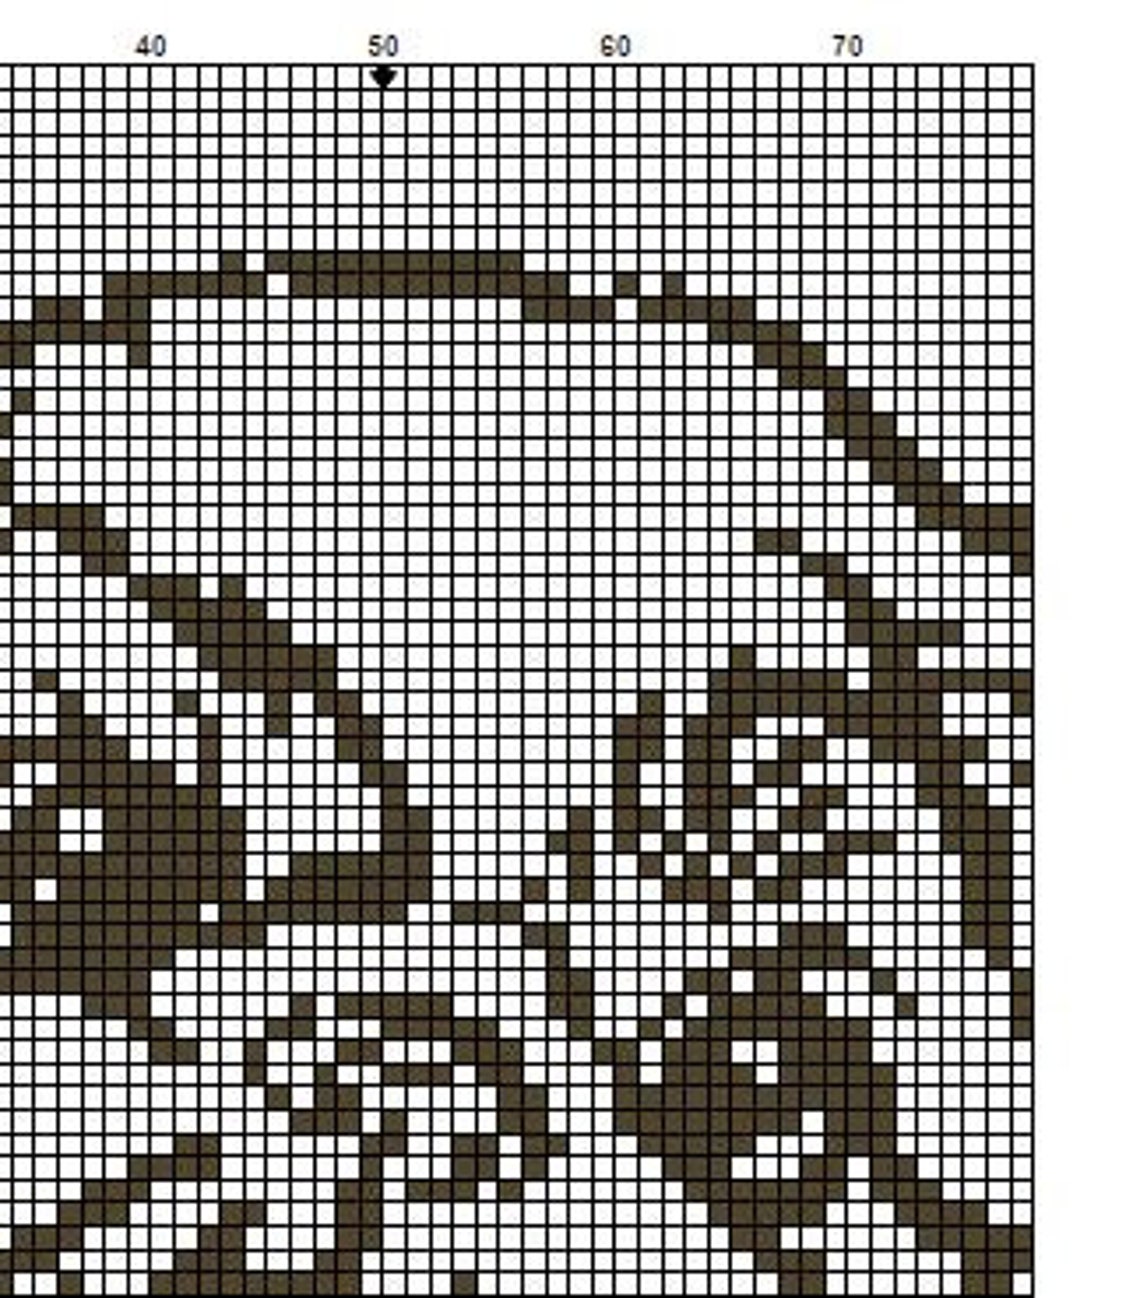 Shih Tzu Dog Silhouette Cross-stitch Monochrome Pattern PDF - Etsy